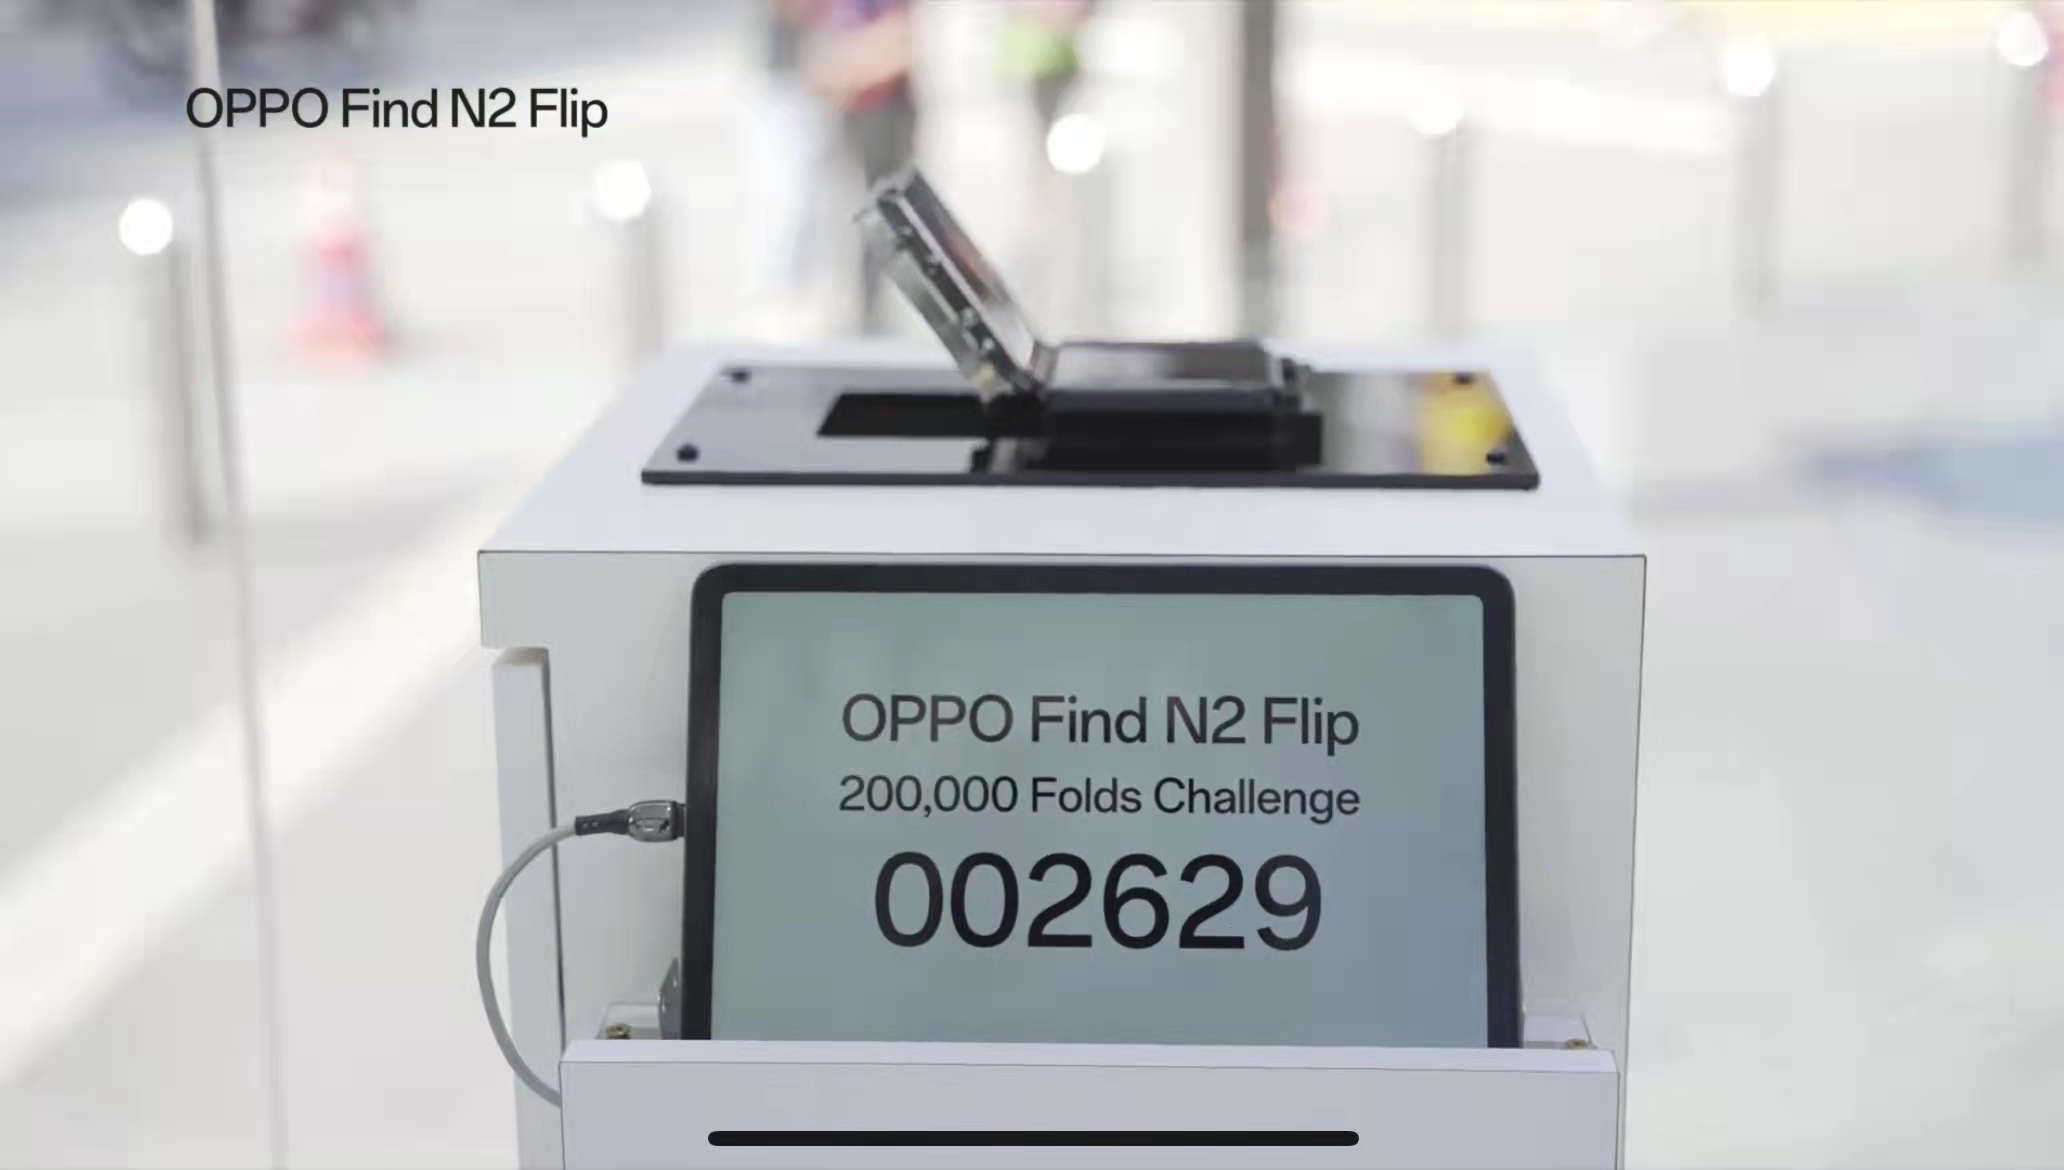 04 OPPO Find N2 Flip 200000 Folds Challenge